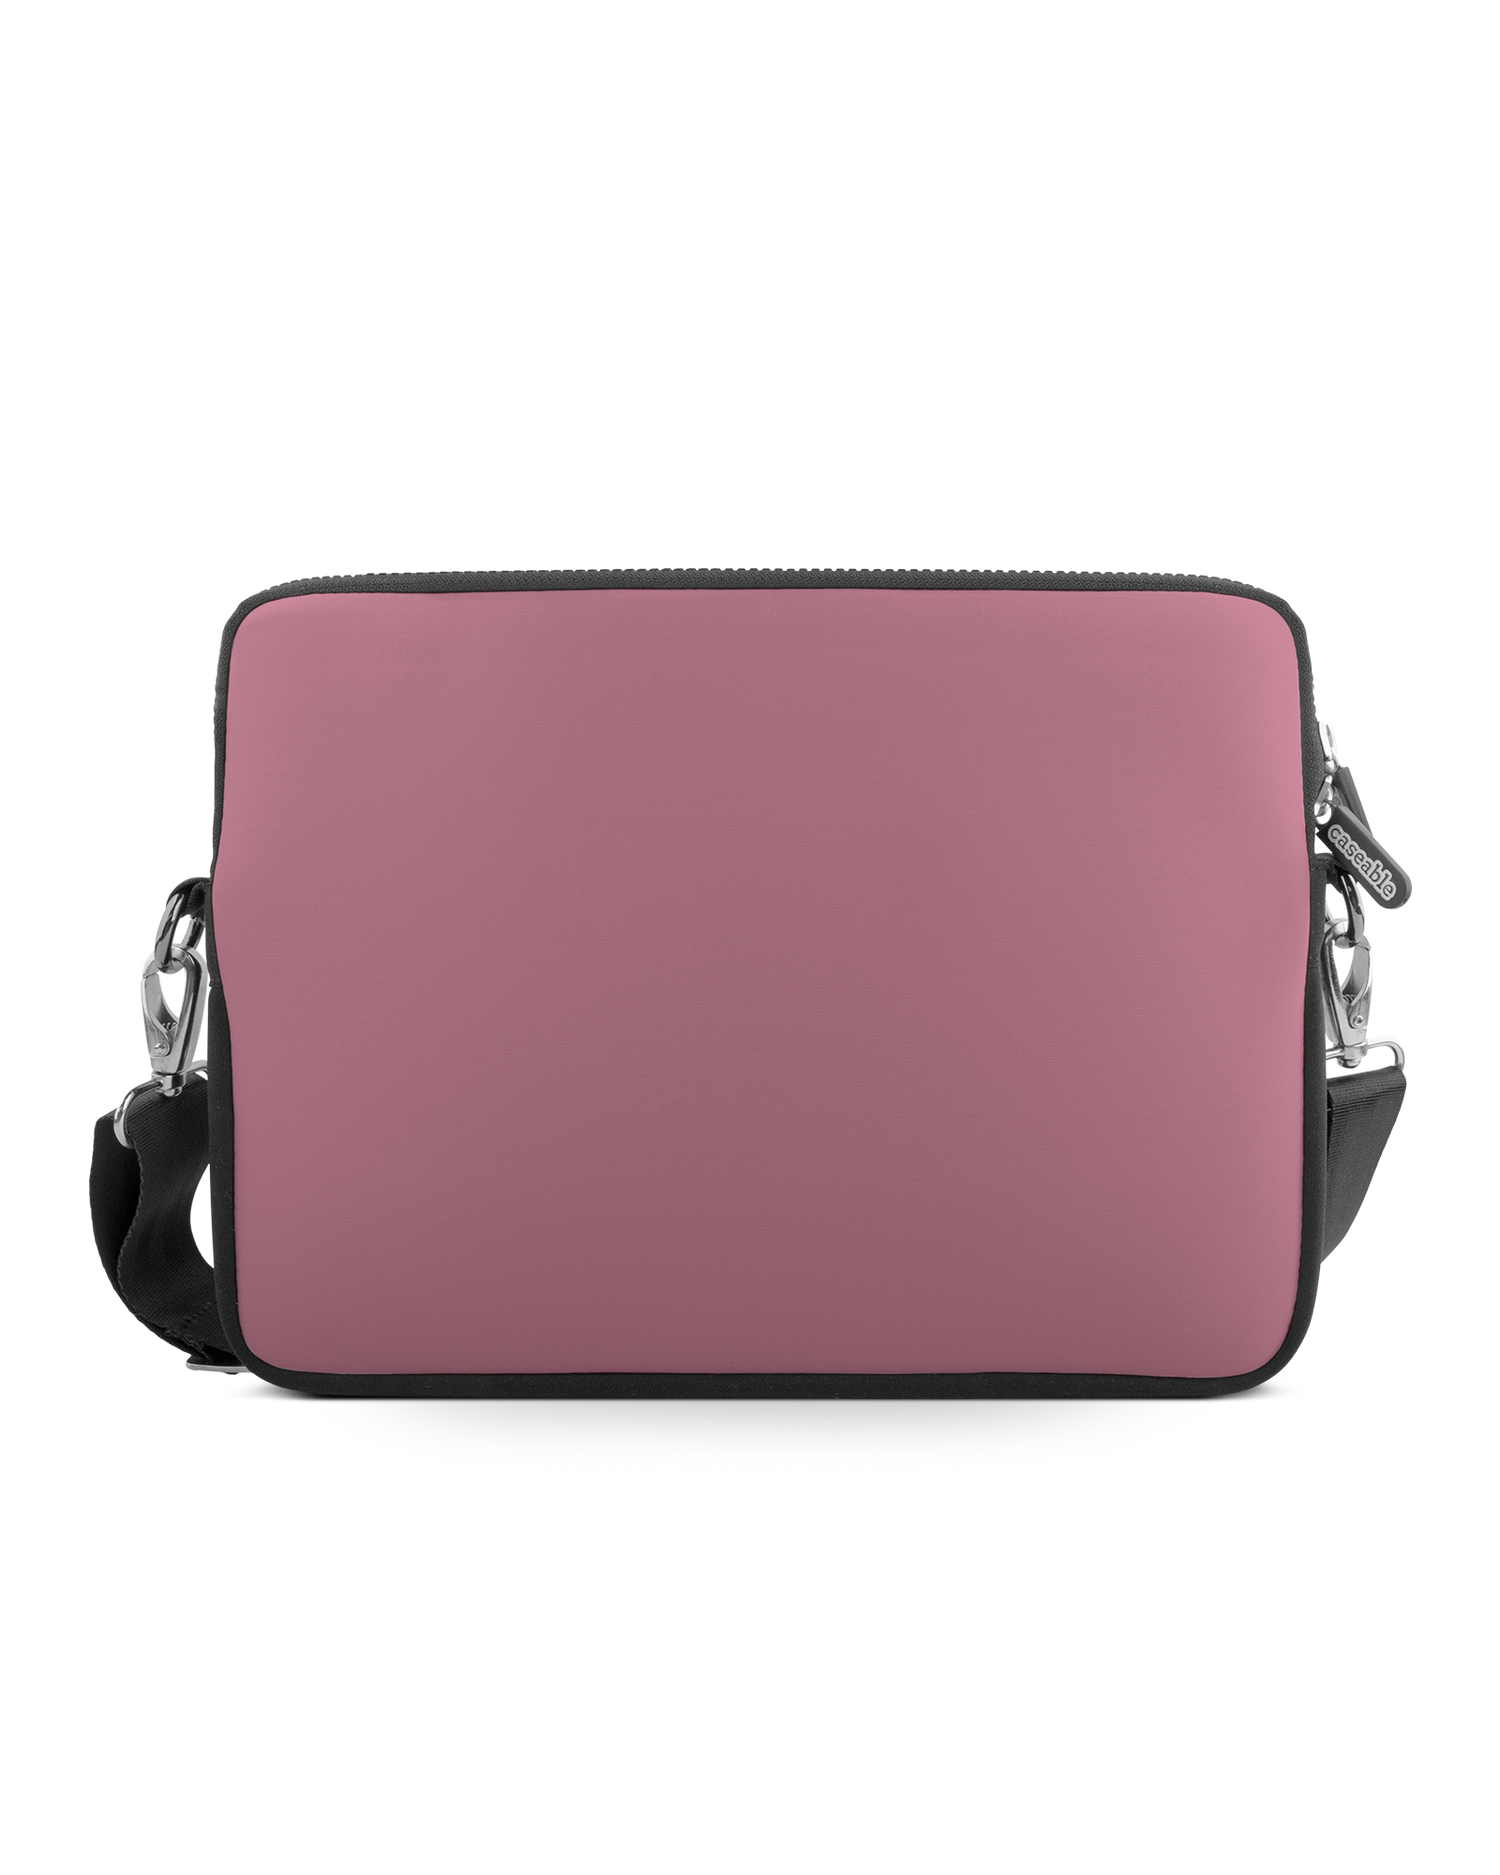 WILD ROSE Premium Laptop Bag 17 inch: Front View